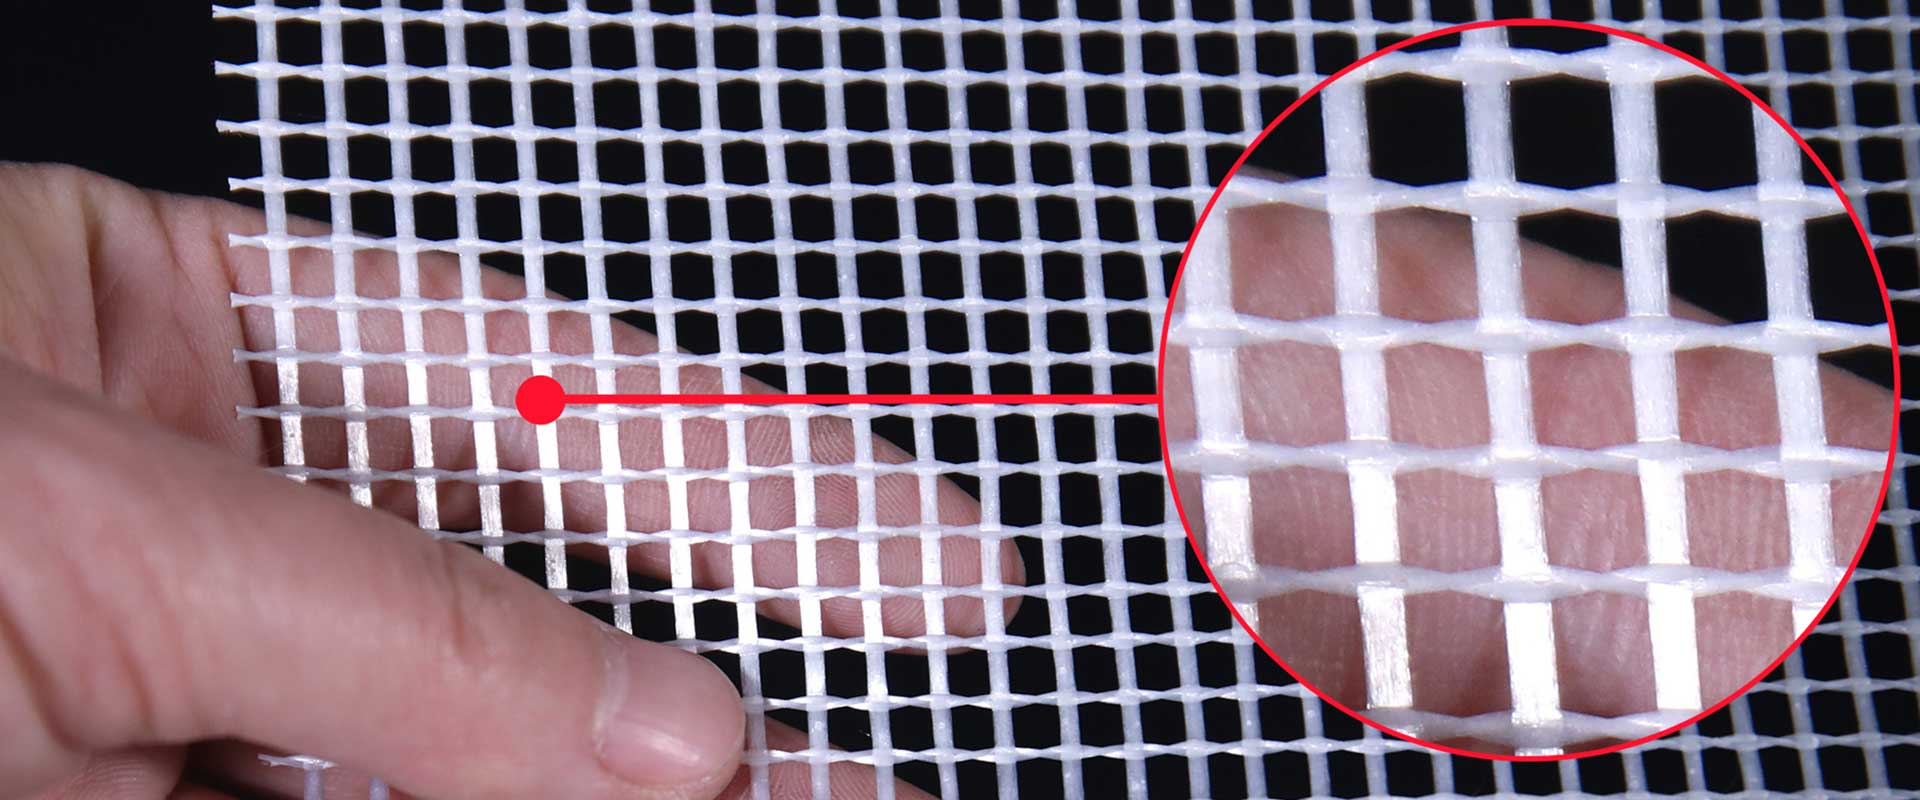 Fiberglass mesh rolls with different colors.